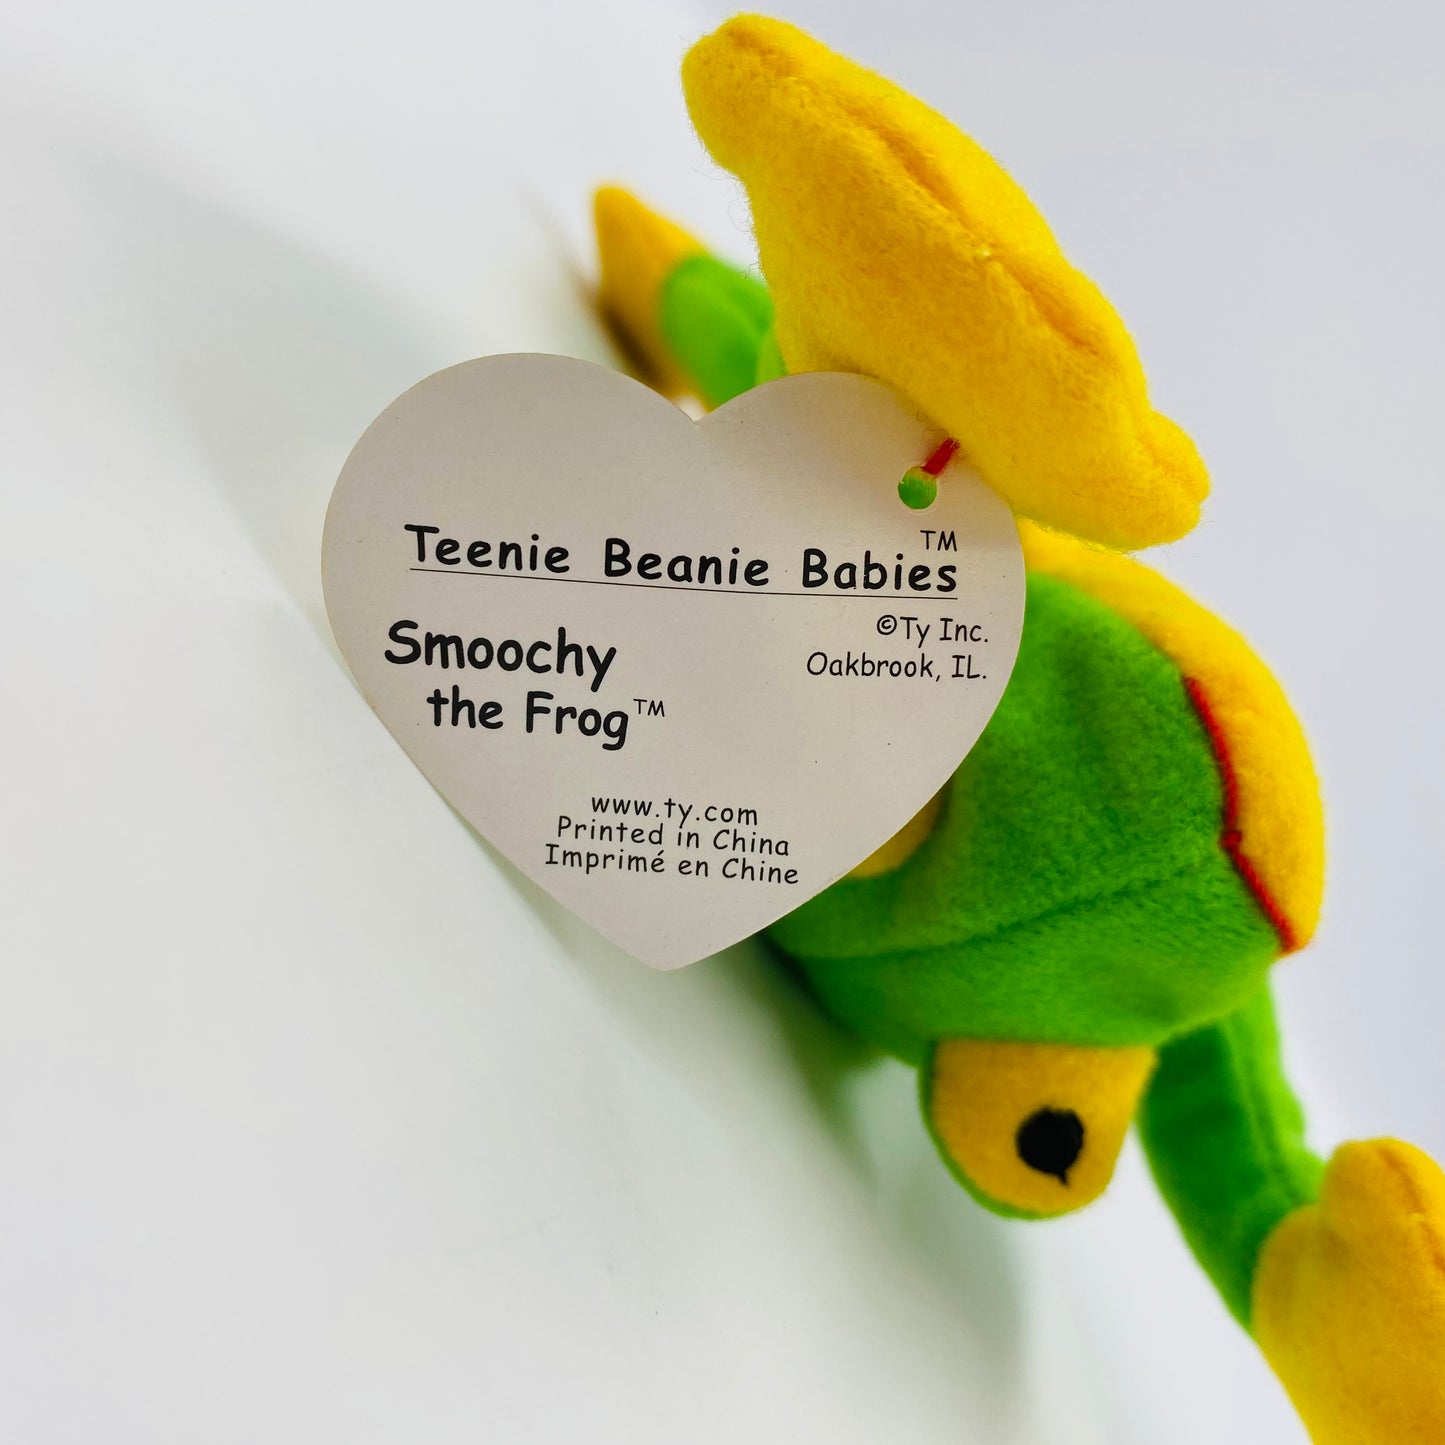 Teenie Beanie Babies Smoochy the Frog McDonald's Happy Meal bean bag plush toy animal (1999) loose